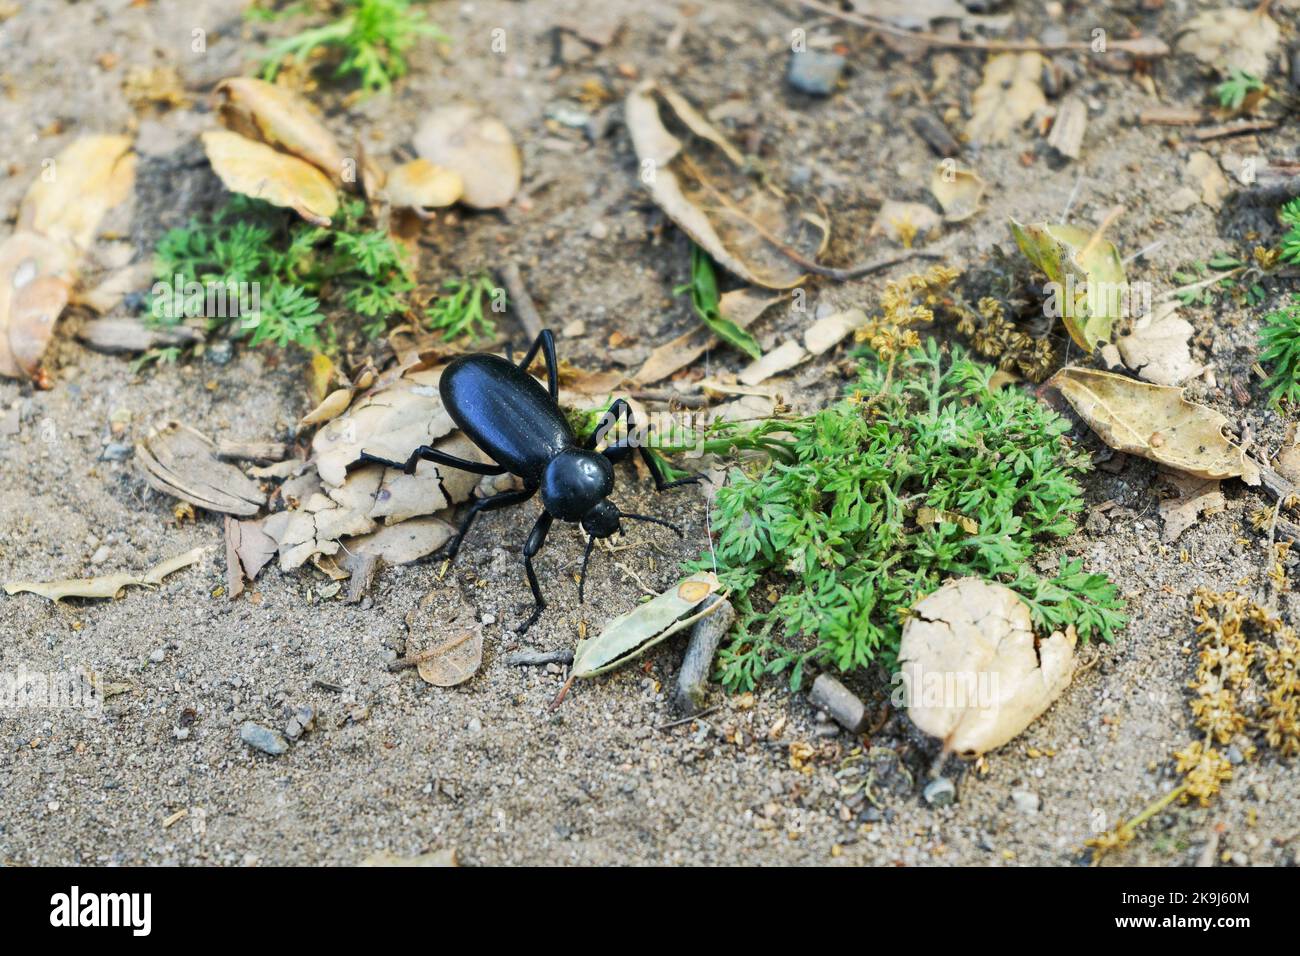 Desert Stink Beetle crawling alongside a hiking trail. Stock Photo